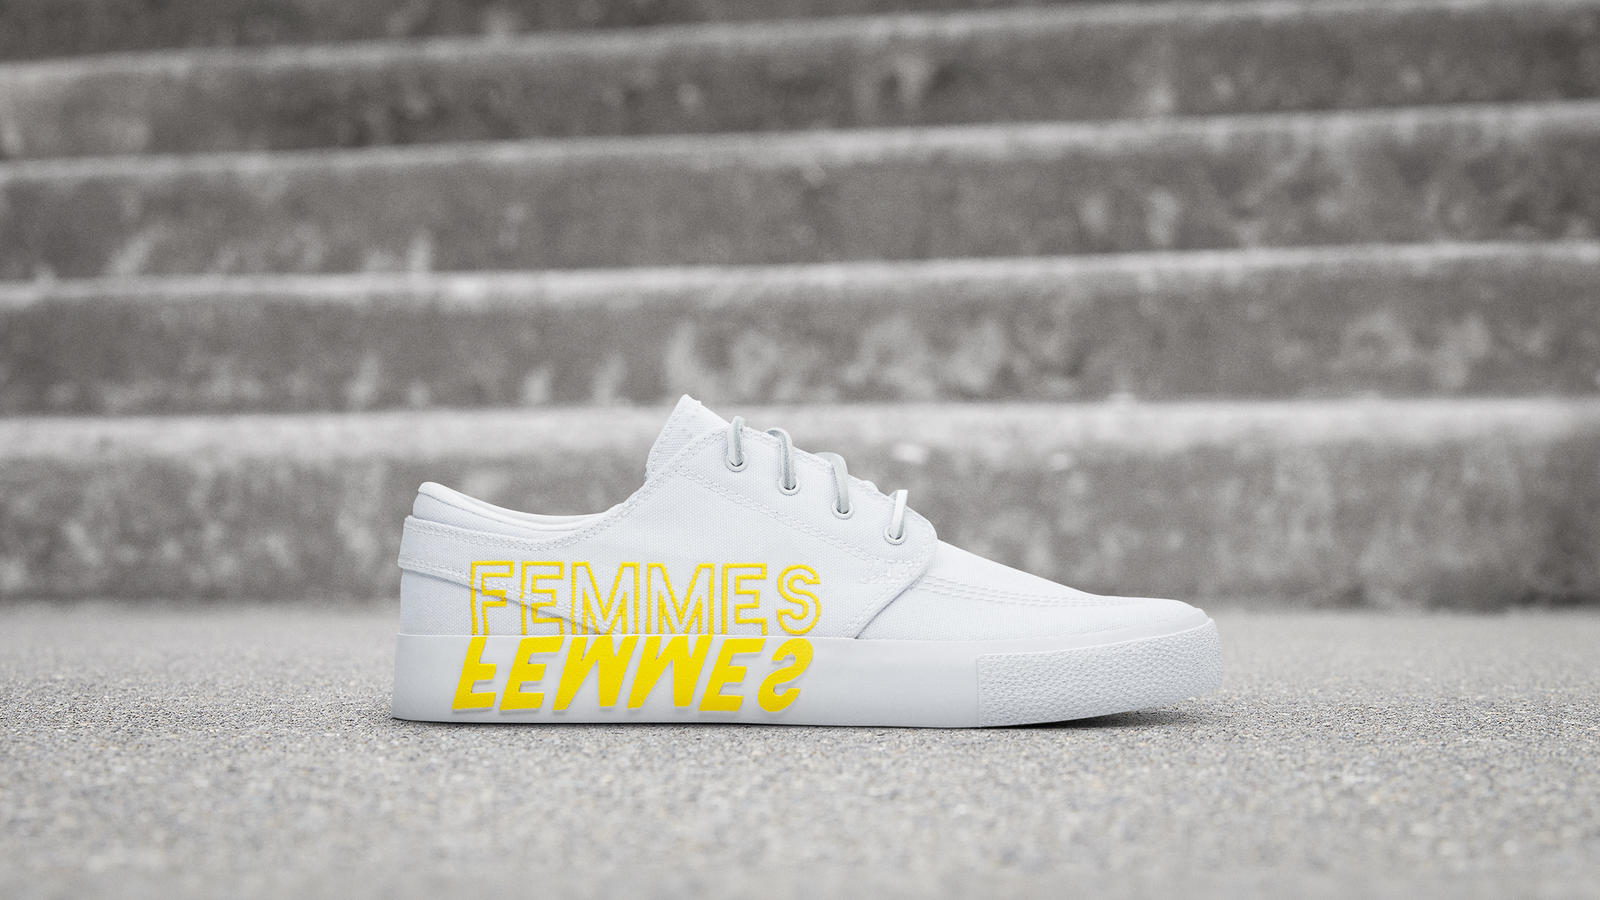 Nike SB Zoom Janoski RM “Violent Femmes” sneakerize.gr